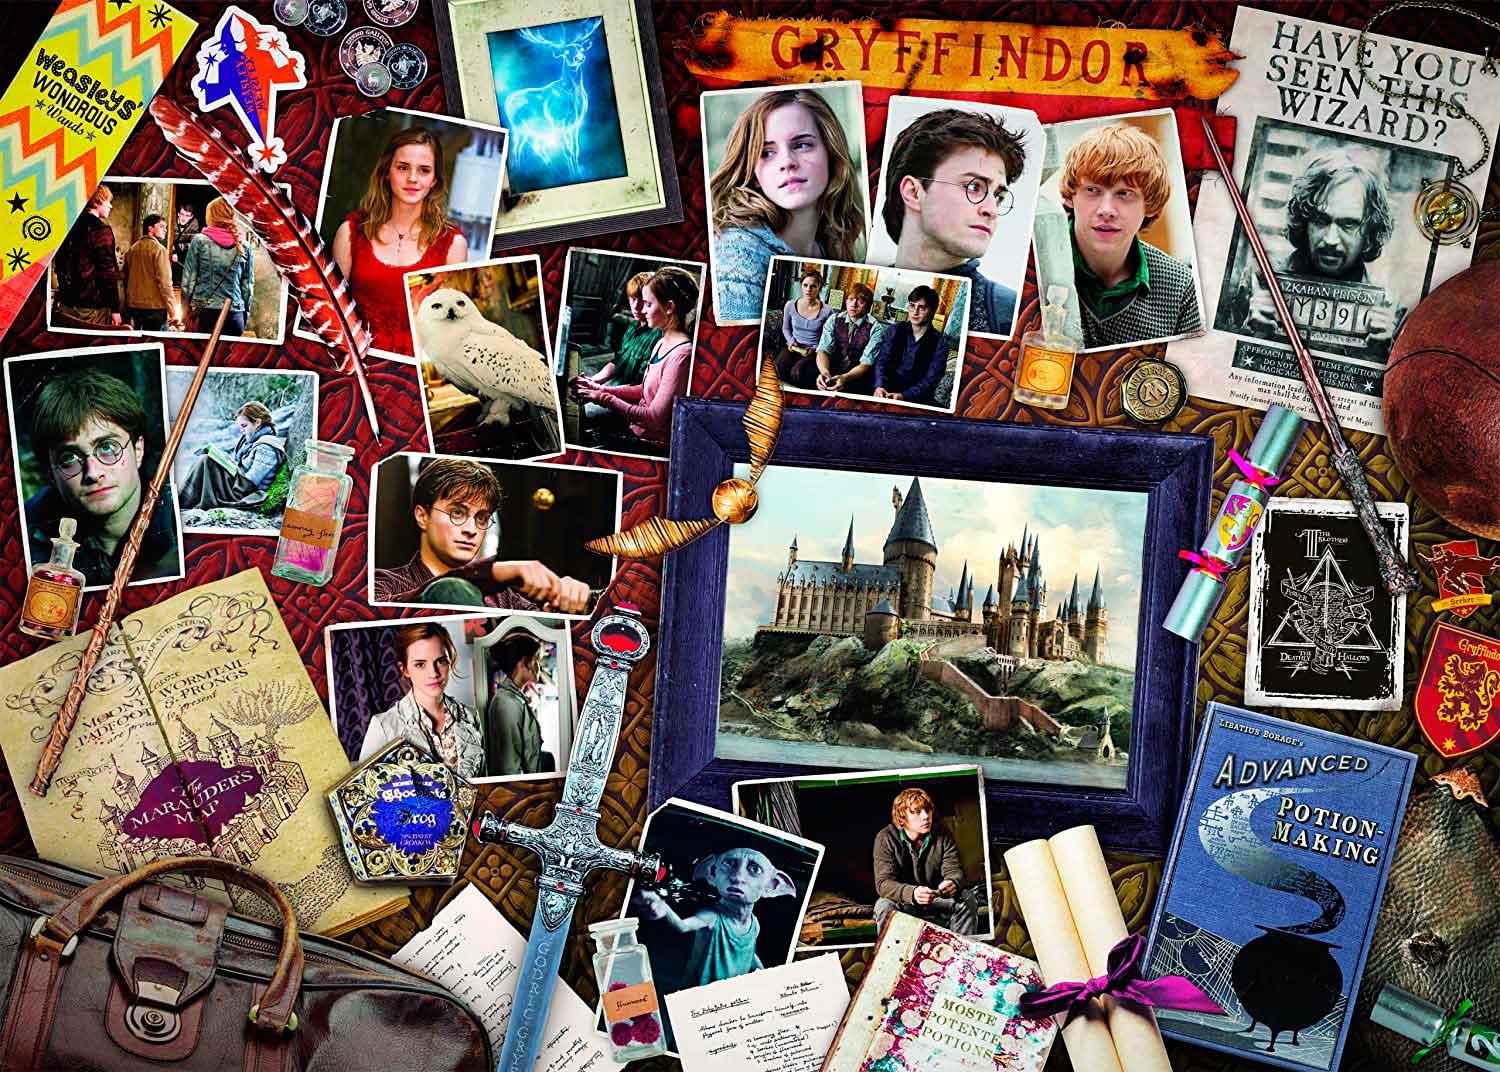 Puzzle Trefl Harry Potter Recuerdos de Hogwarts de 500 Pzs